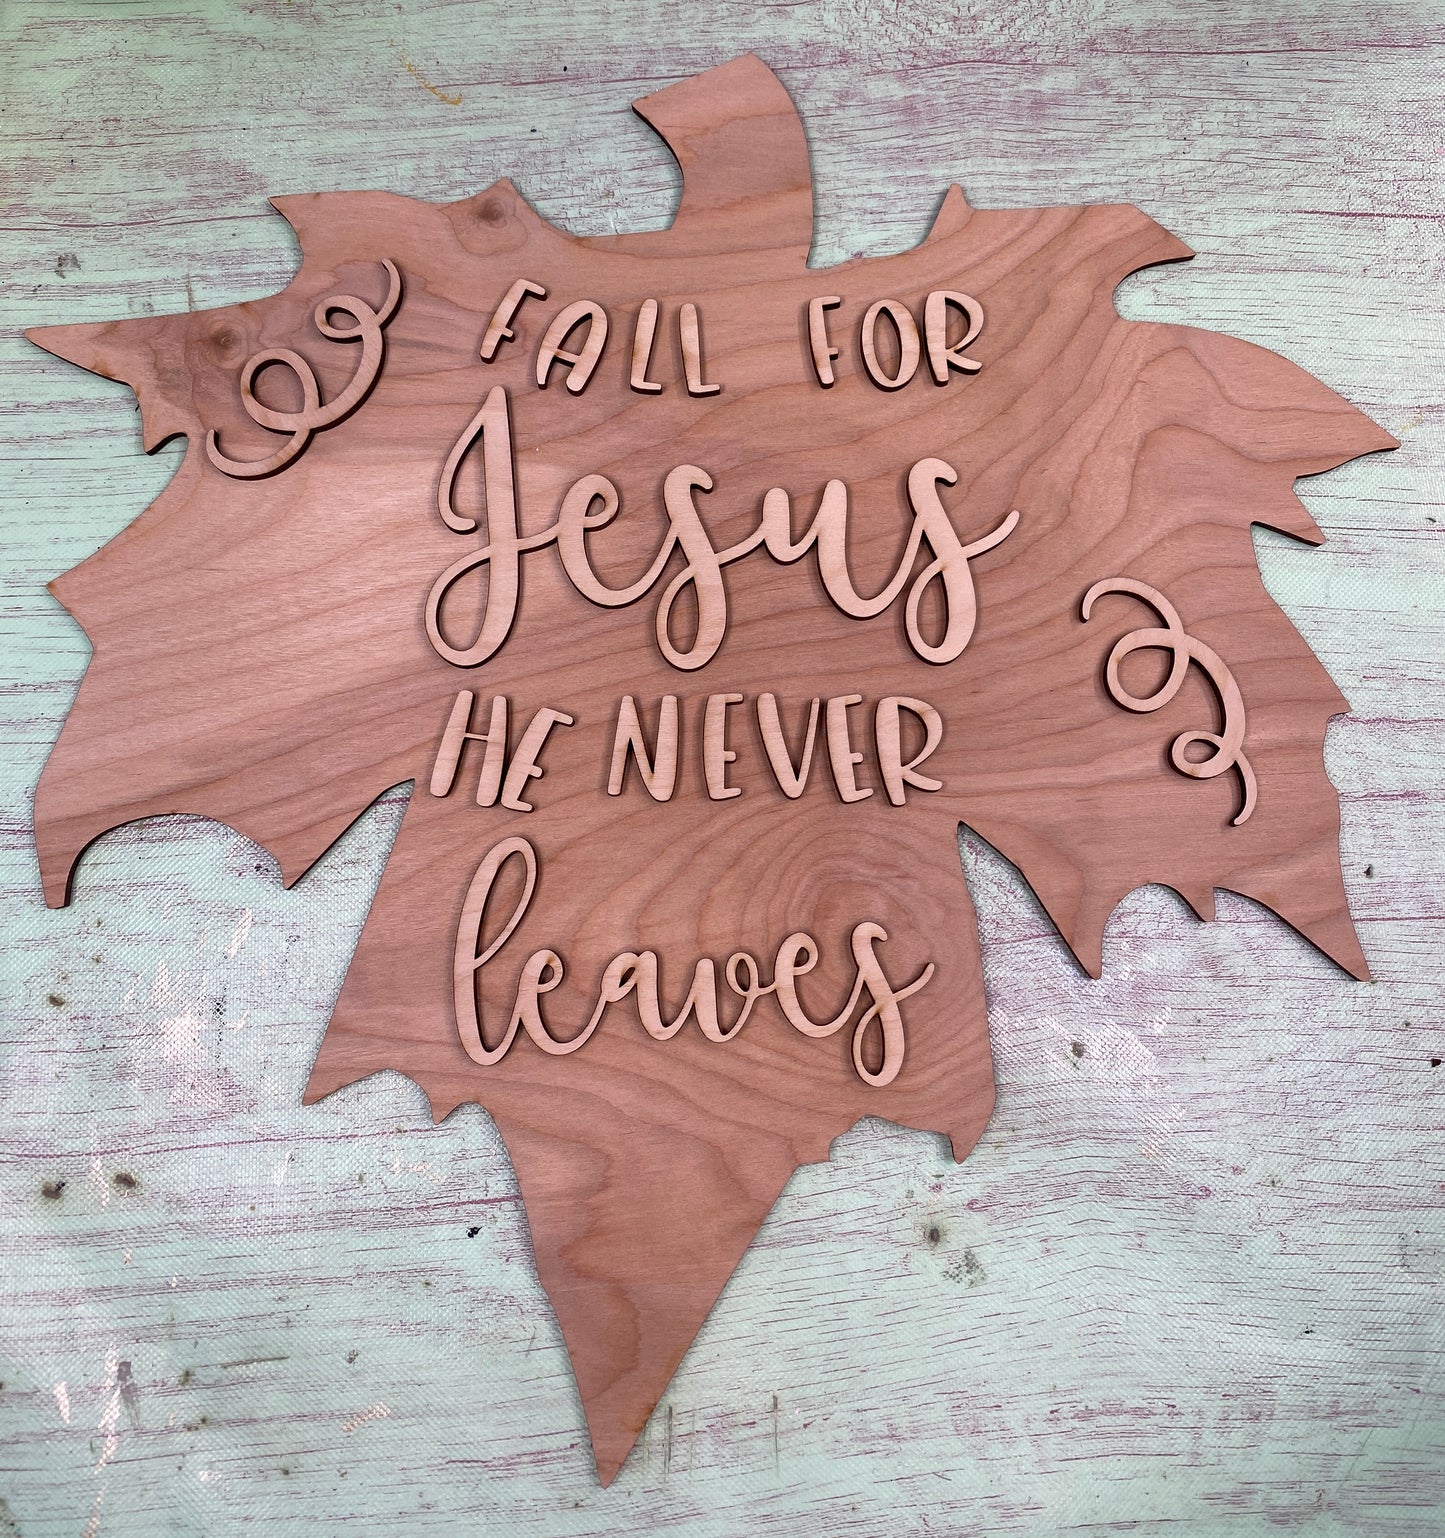 Fall Leaf / Fall for Jesus Door Hanger Laser Cut Wooden Blank